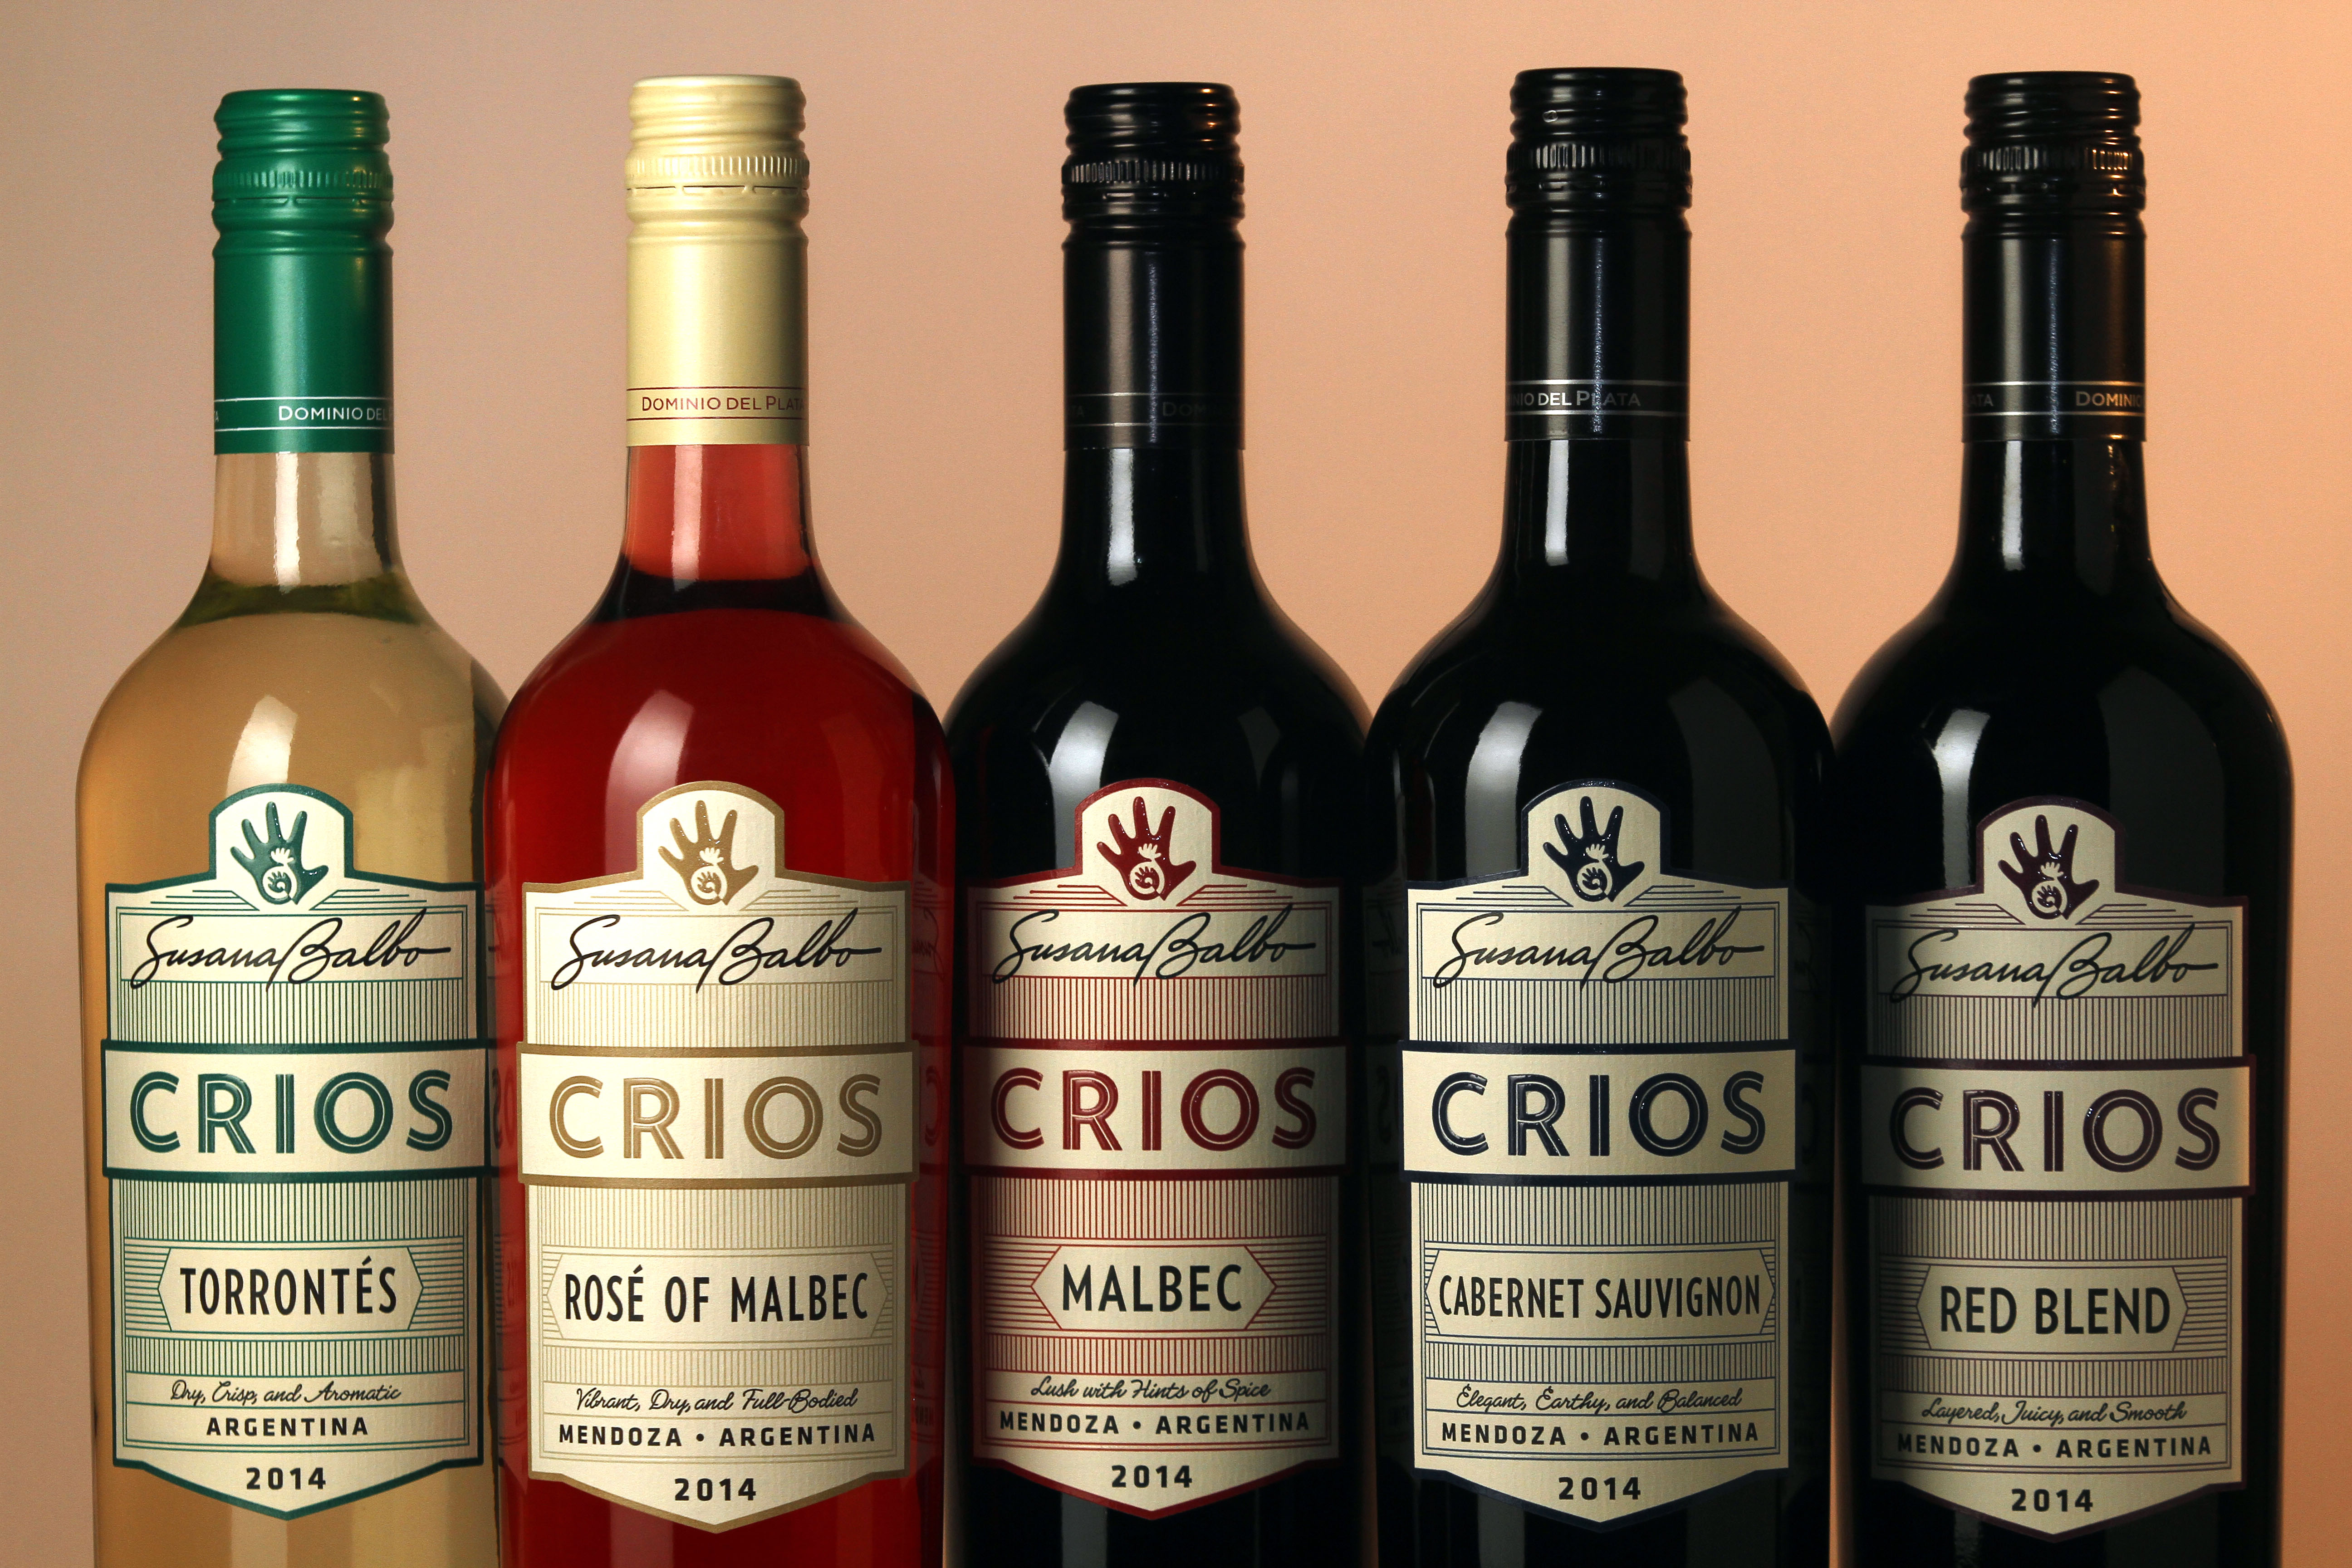 Crios line of wines